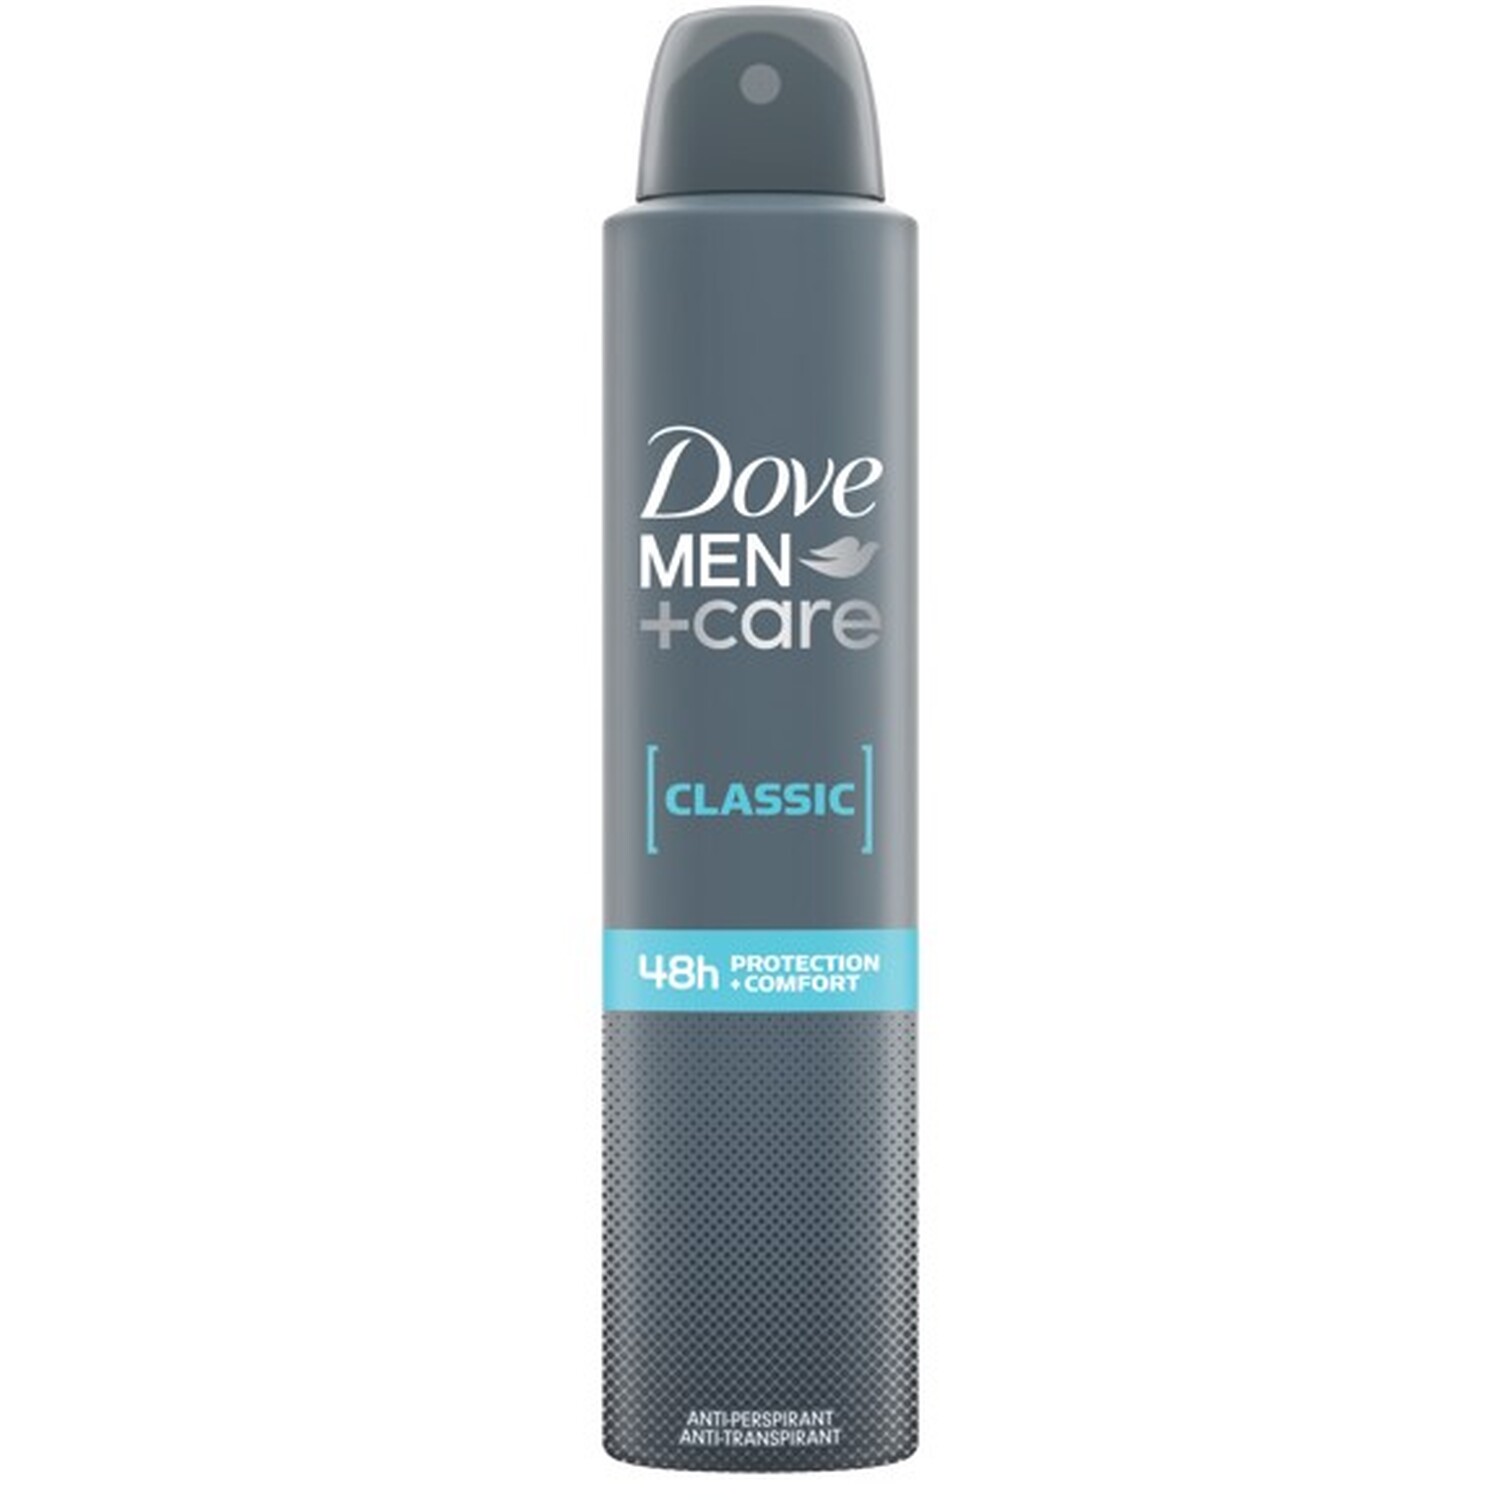 Dove Men +Care Classic Anti-Perspirant 200ml - Grey Image